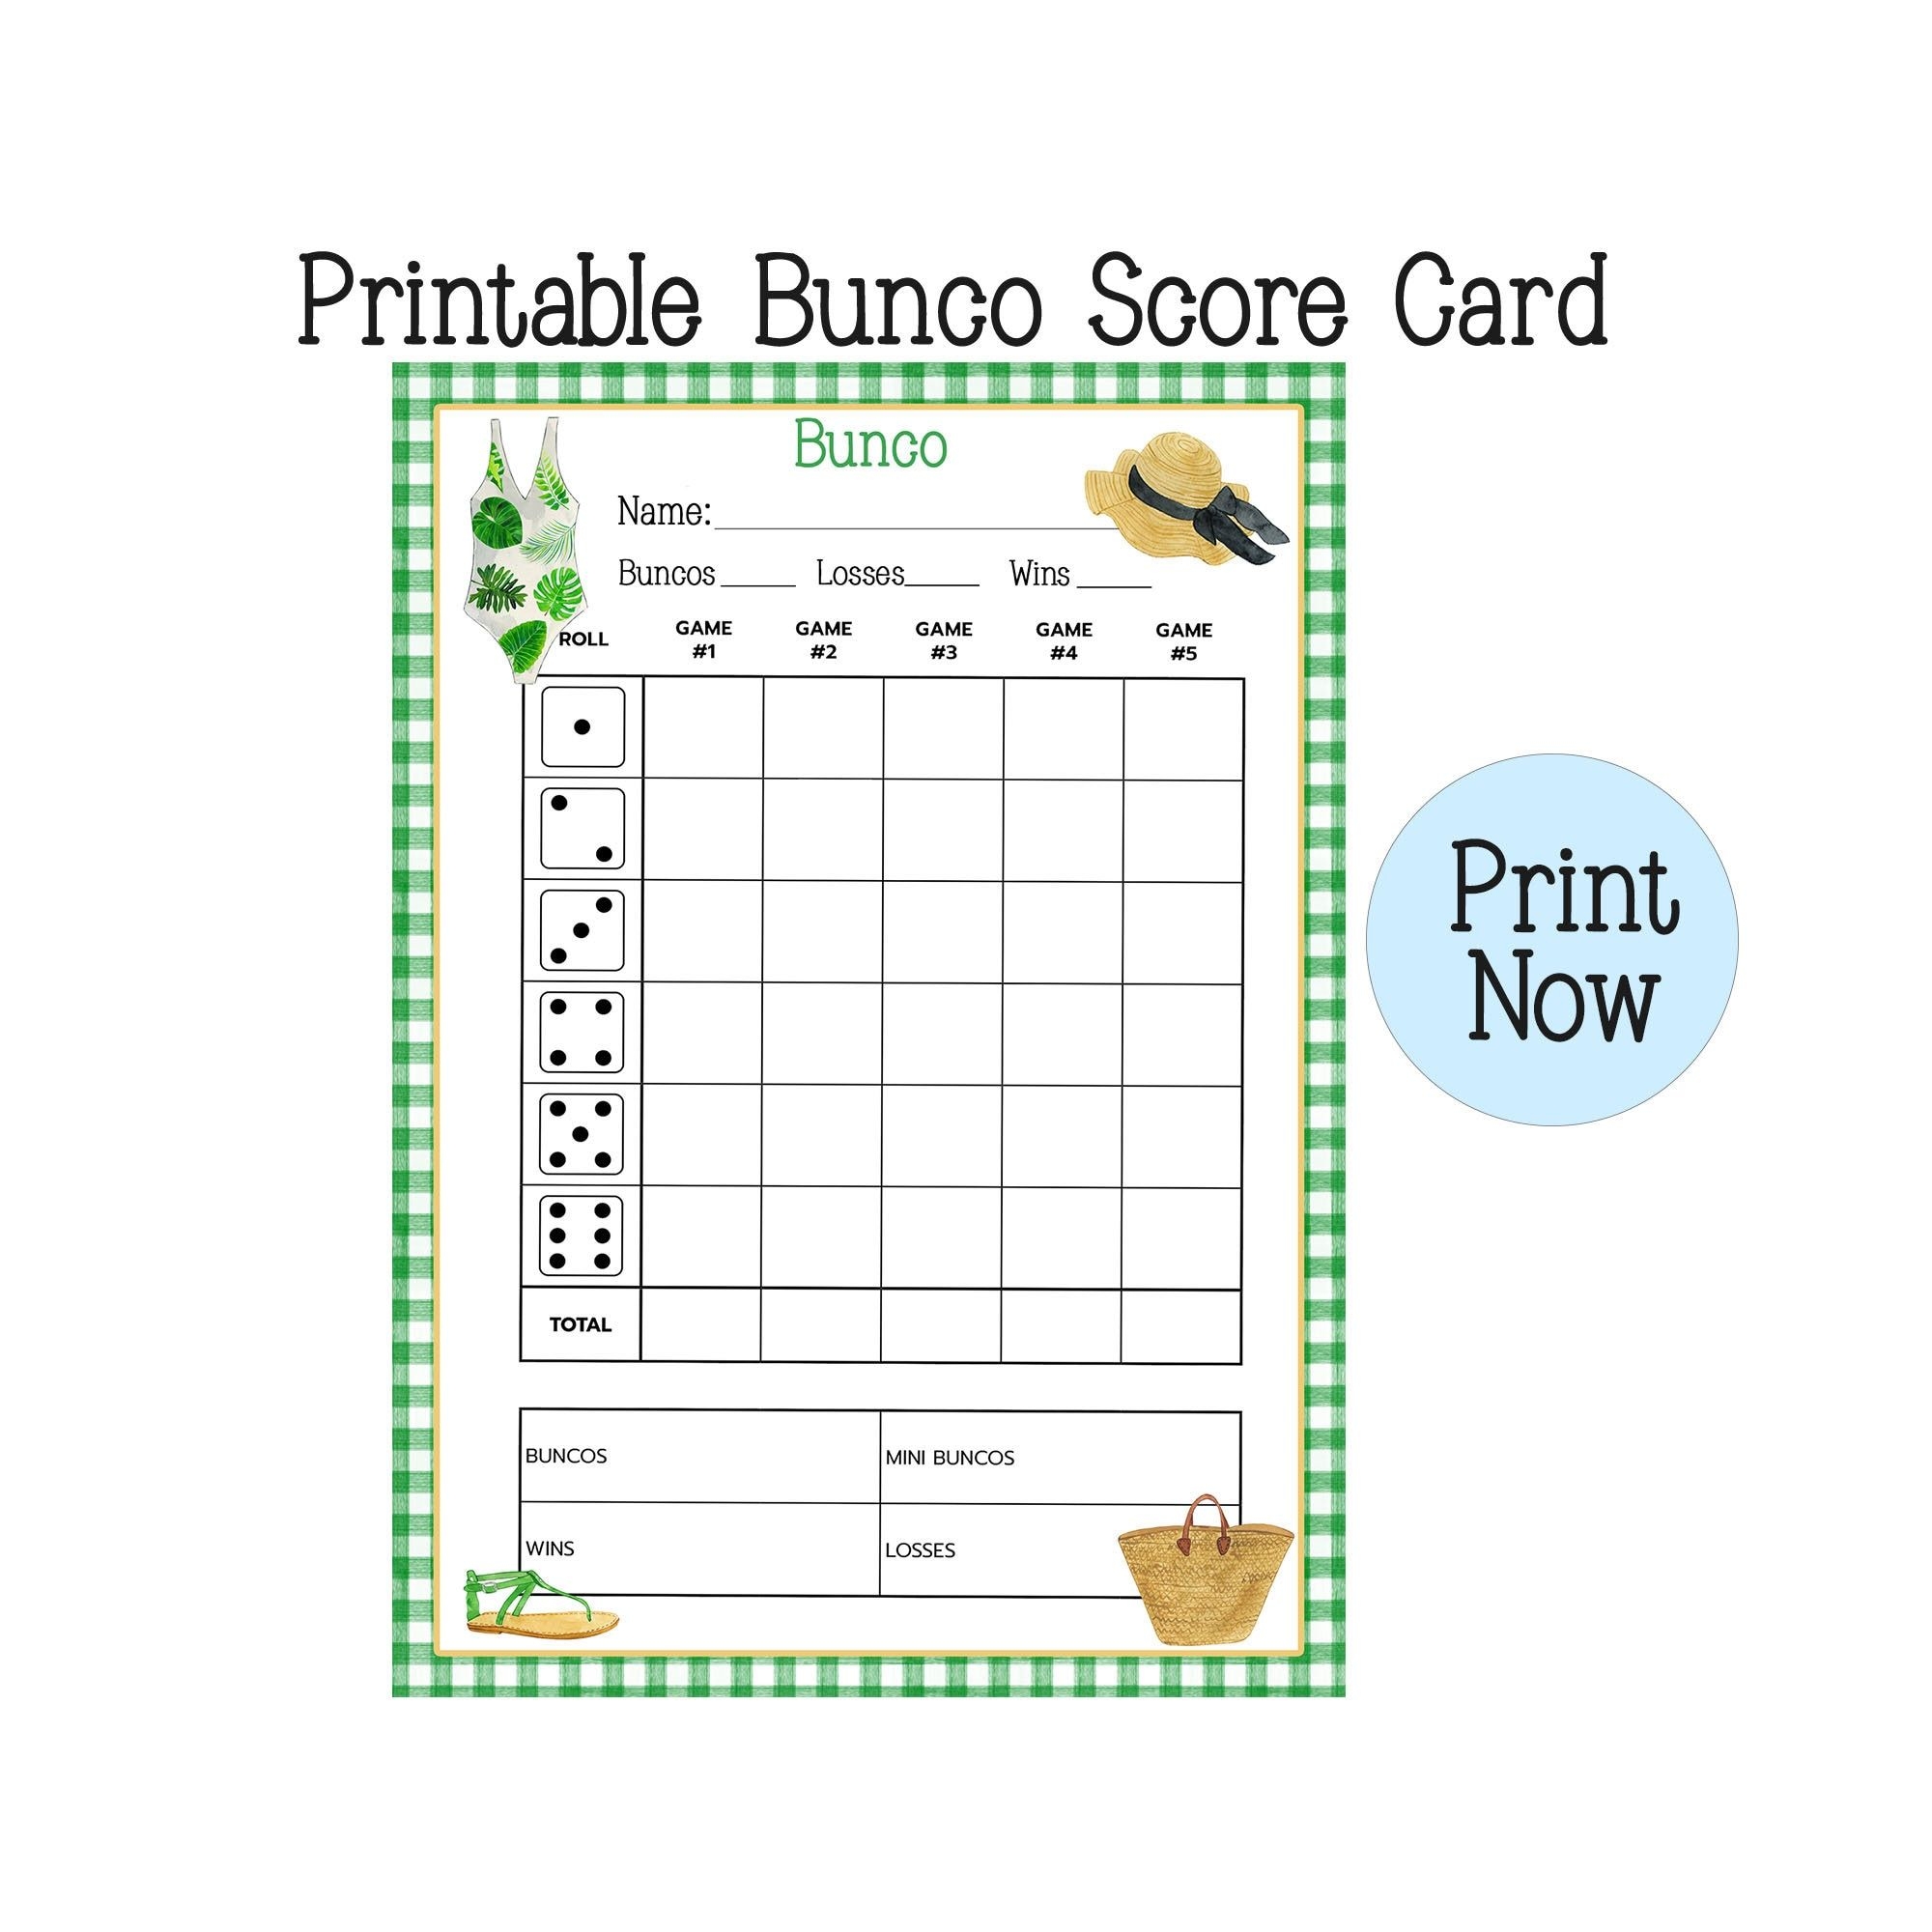 Summer Bunco Score Card Score Sheet Bunko Party Spring Scorecard Summer Theme Bunco Printable Template Instant Download Digital File Etsy Bunco Template Printable Summer Theme